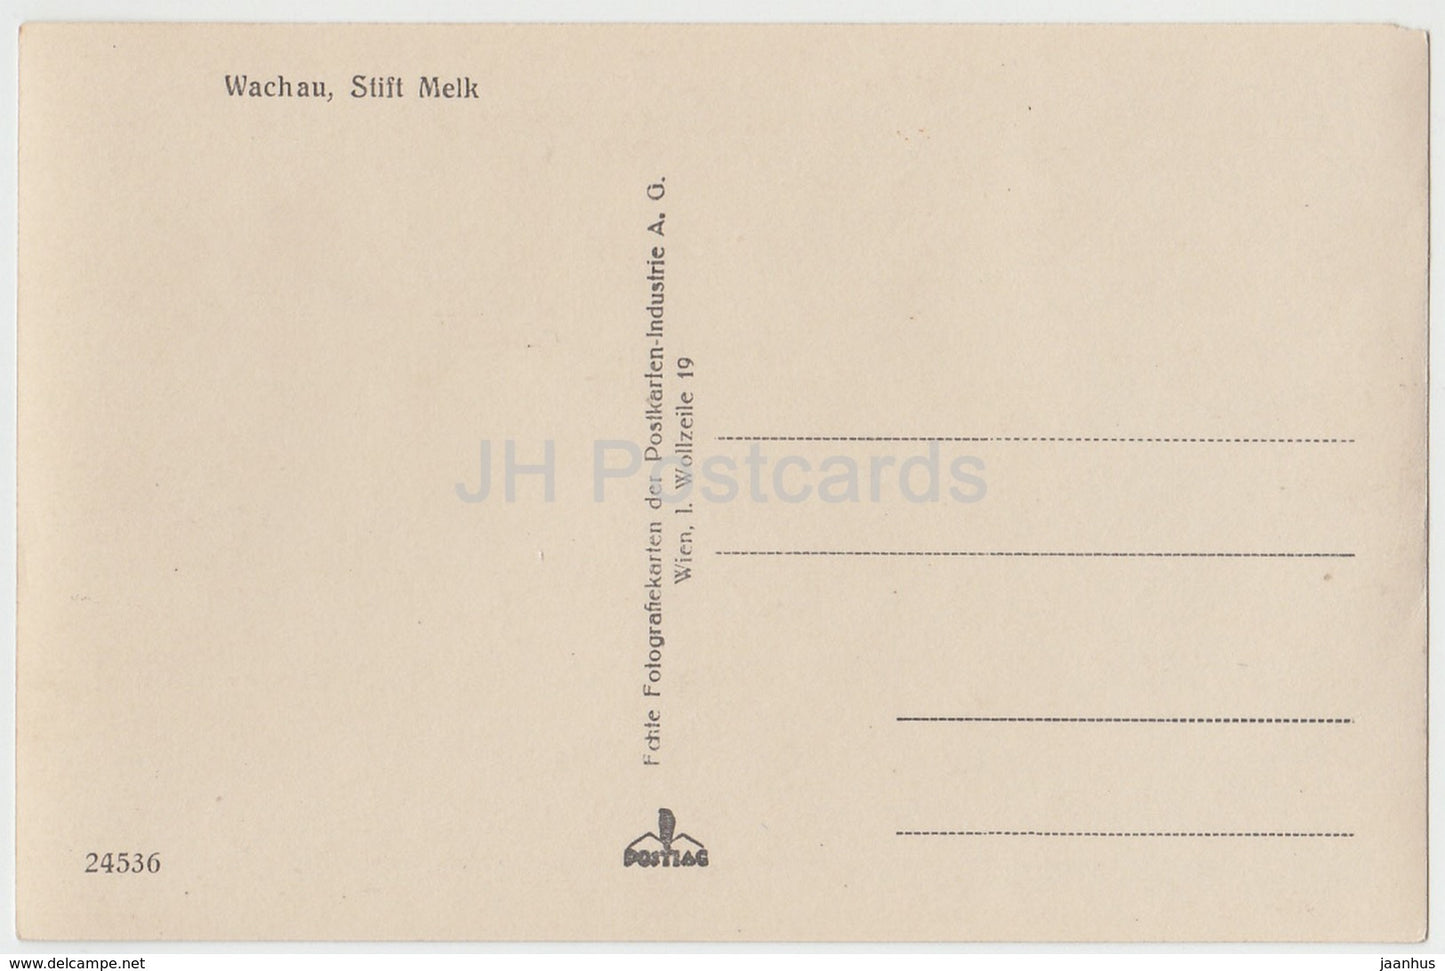 Wachau - Stift Melk - ship - 24536 - old postcard - Austria - unused